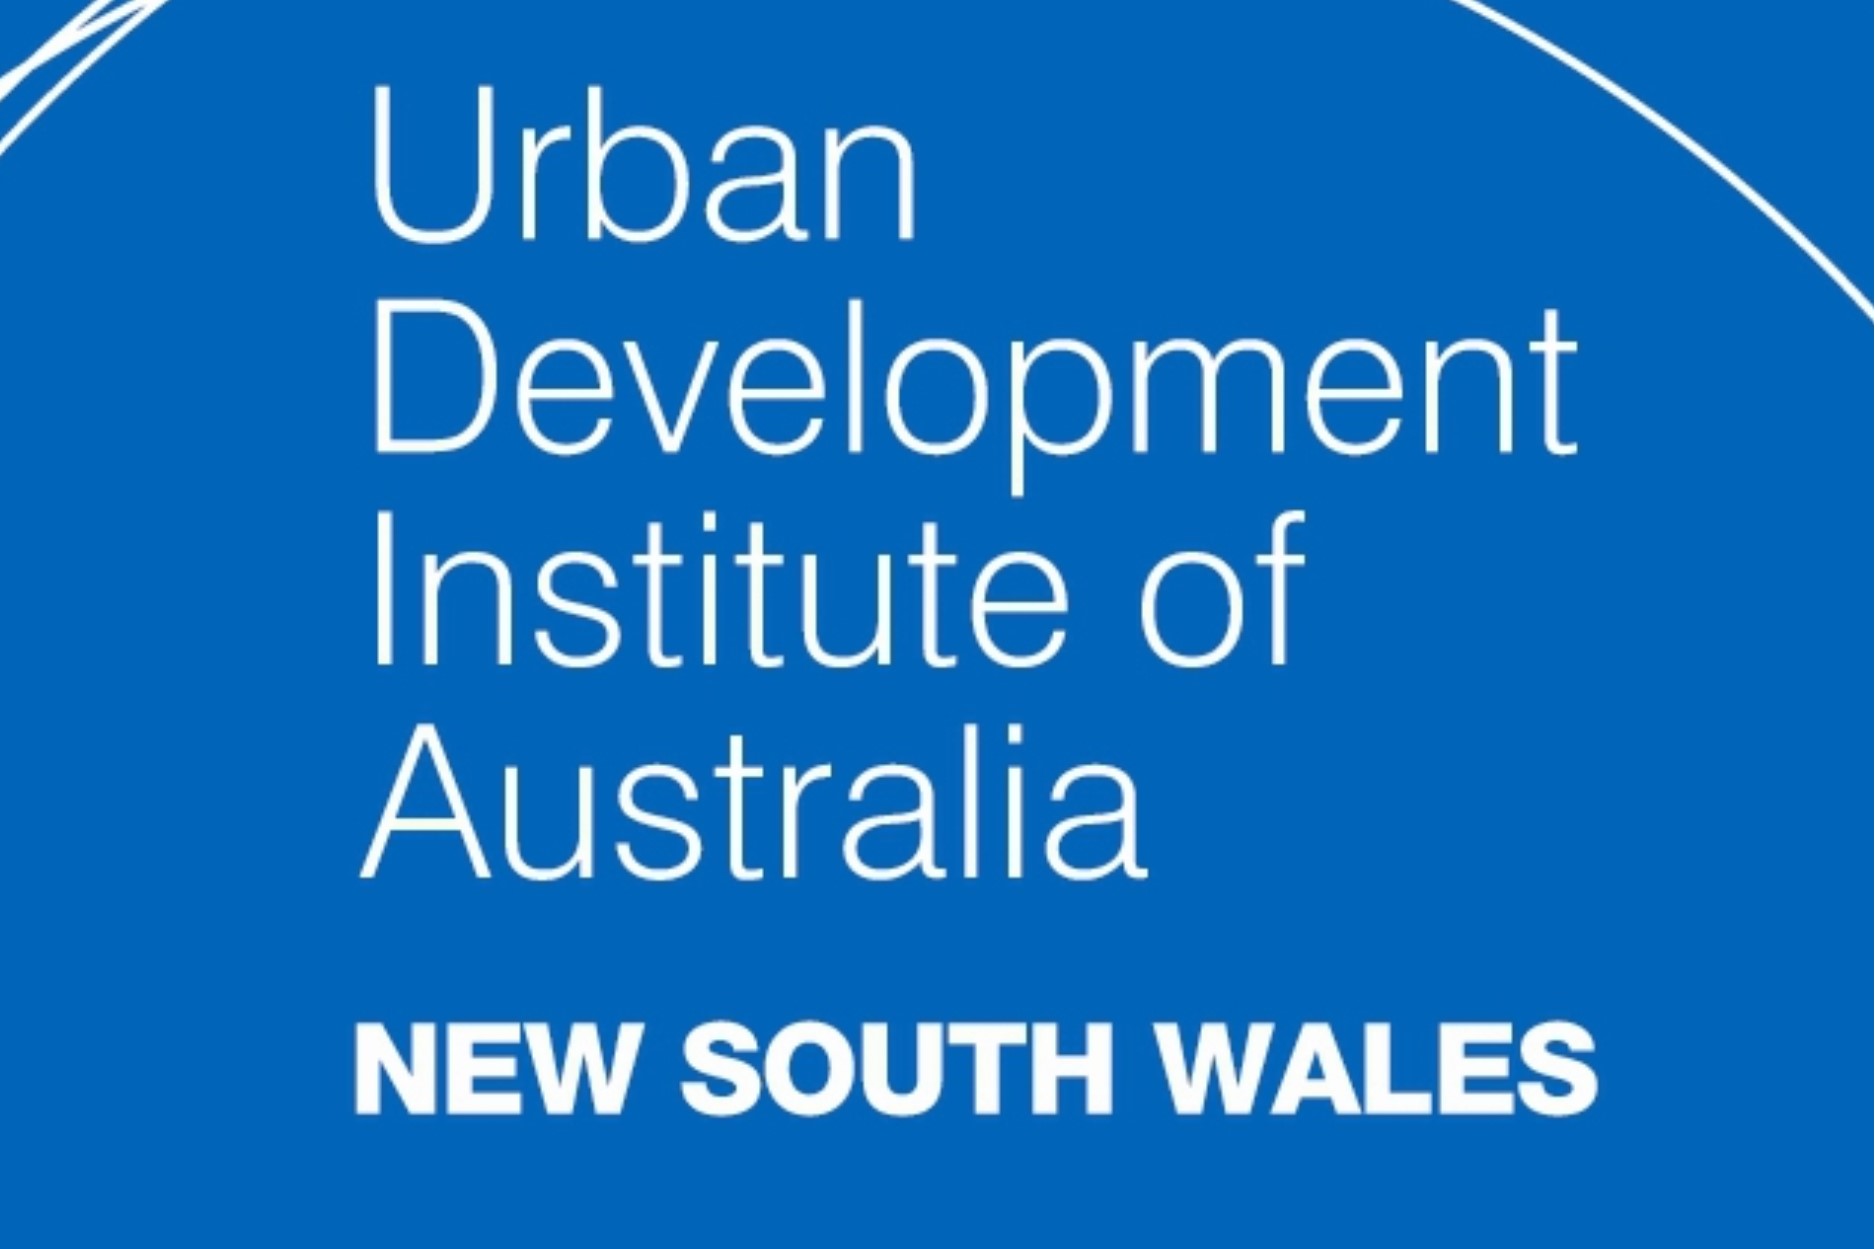 urban development institute of australia new south wales logo